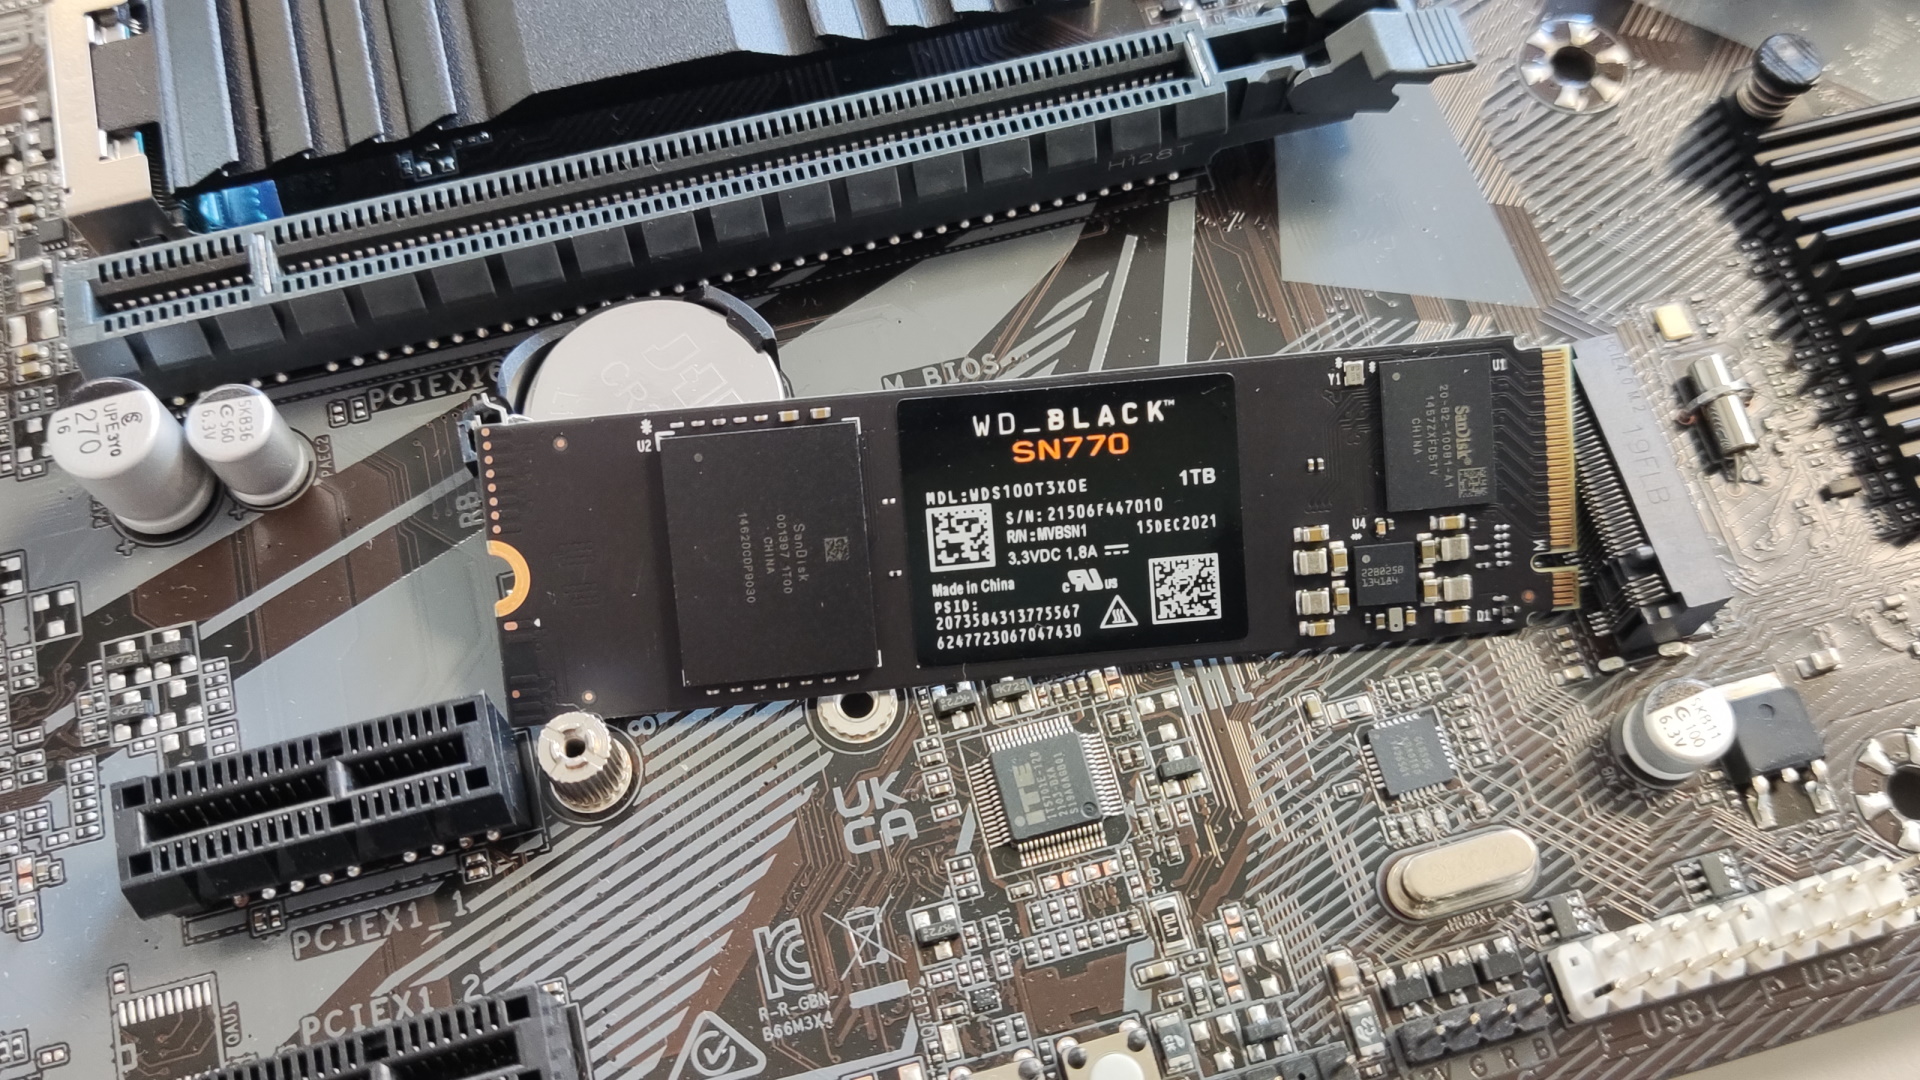 Western Digital WD Black SN770 resting on a motherboard.